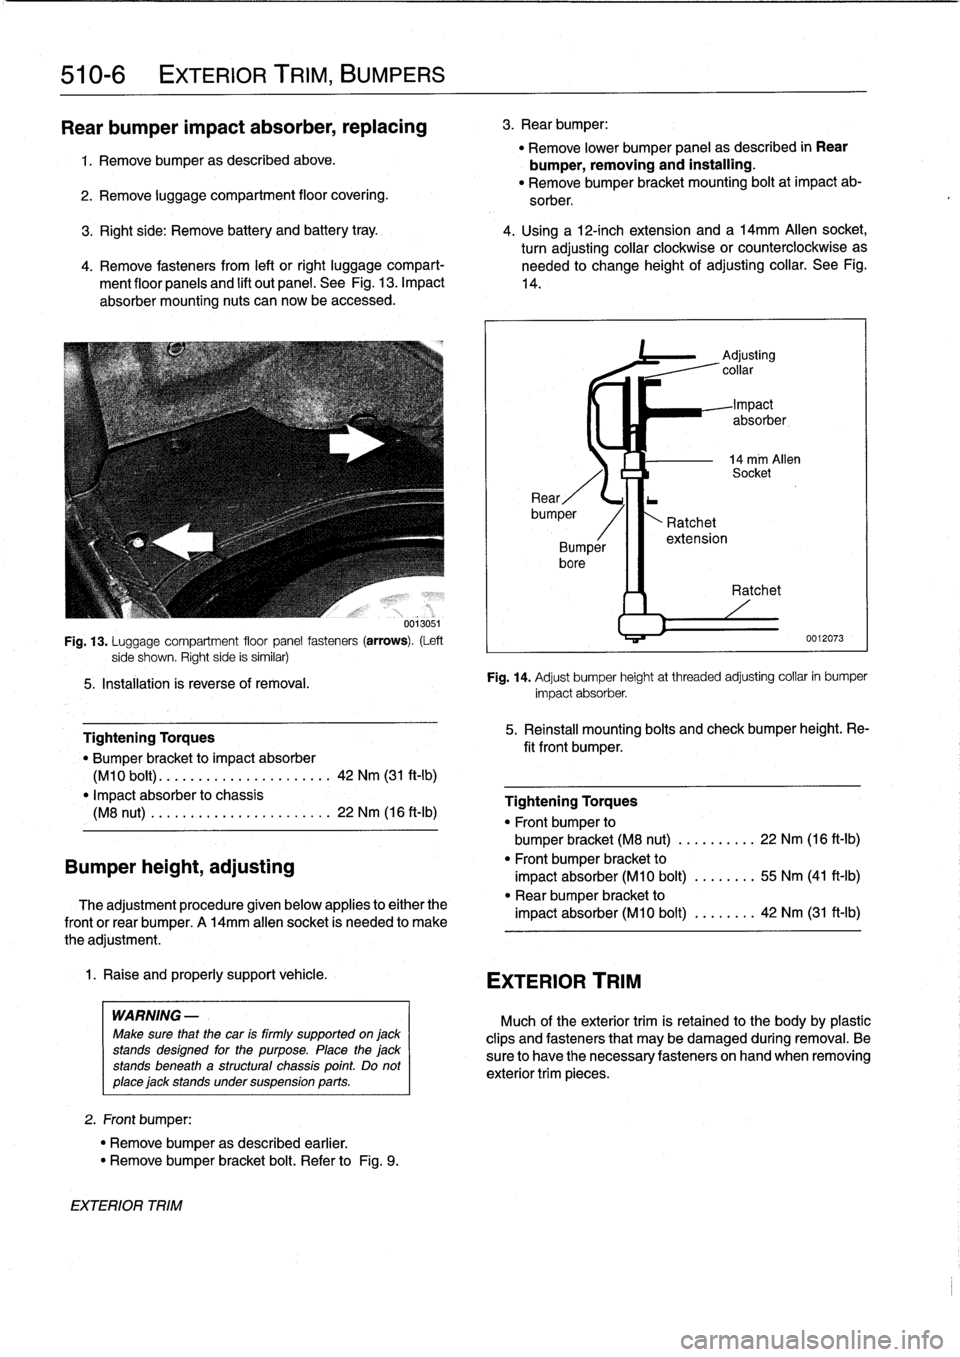 BMW 328i 1994 E36 Workshop Manual 
510-
6

	

EXTERIOR
TRIM,
BUMPERS

Rear
bumper
impact
absorber,replacing

1
.
Remove
bumperas
described
above
.

2
.
Remove
luggage
compartment
floor
covering
.

Fig
.
13
.
Luggage
compartment
floor
